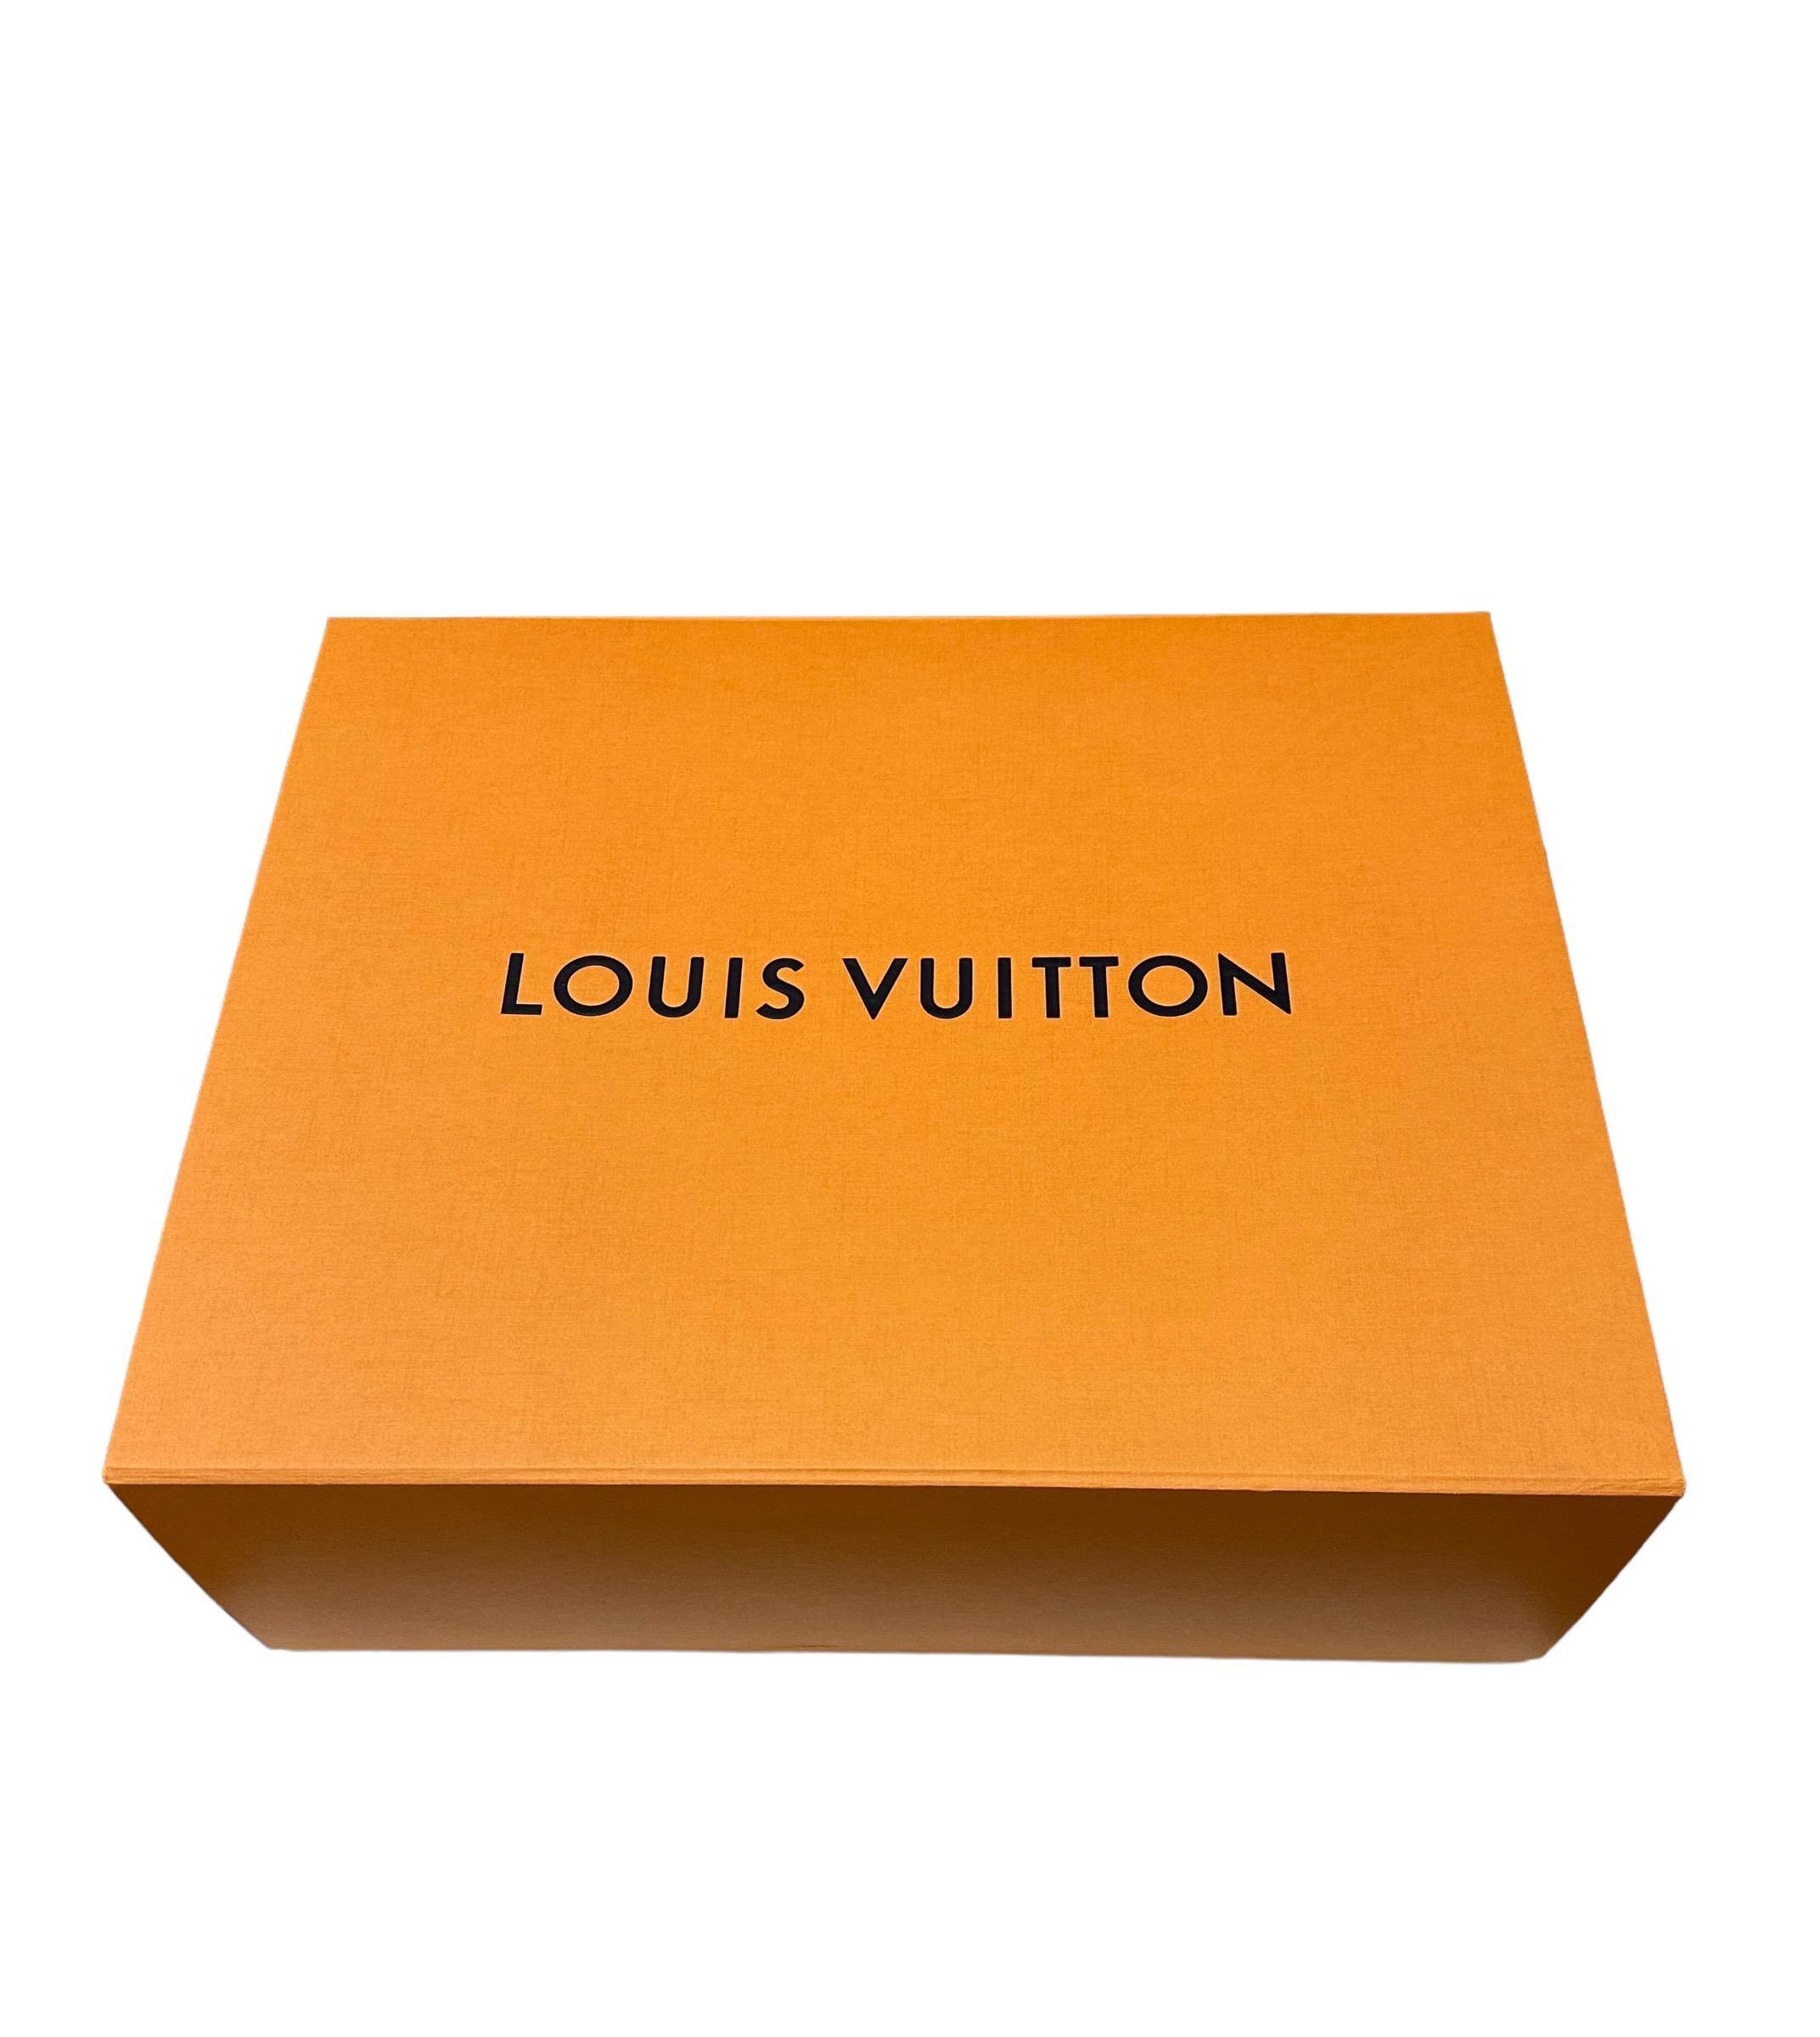 Louis Vuitton Urs Fischer Limited Edition Artycapucines BB Bag  For Sale 14